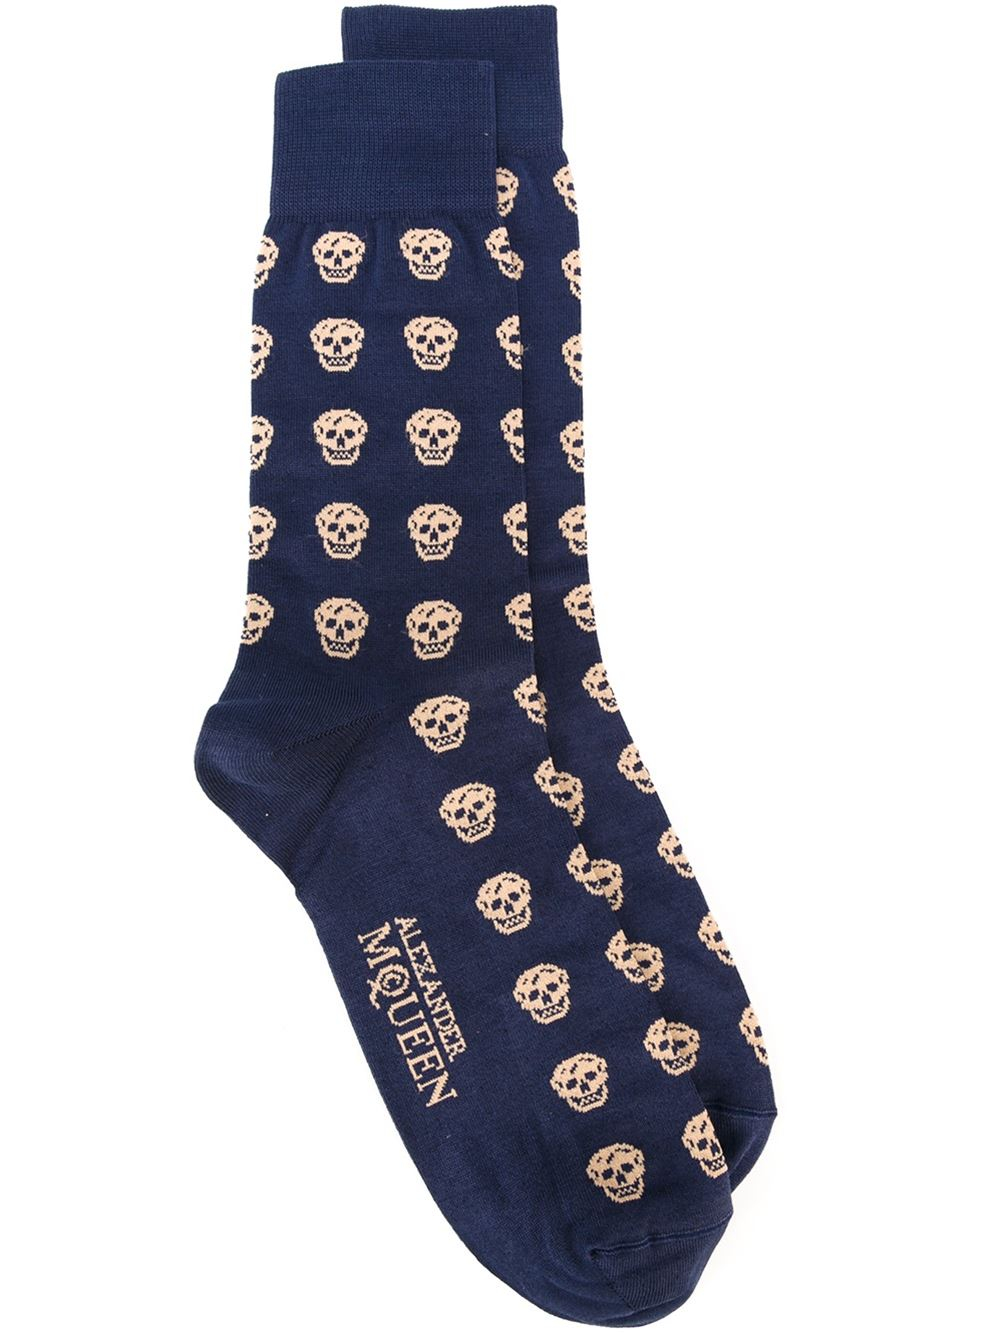 Lyst - Alexander Mcqueen Skull Knit Socks in Blue for Men